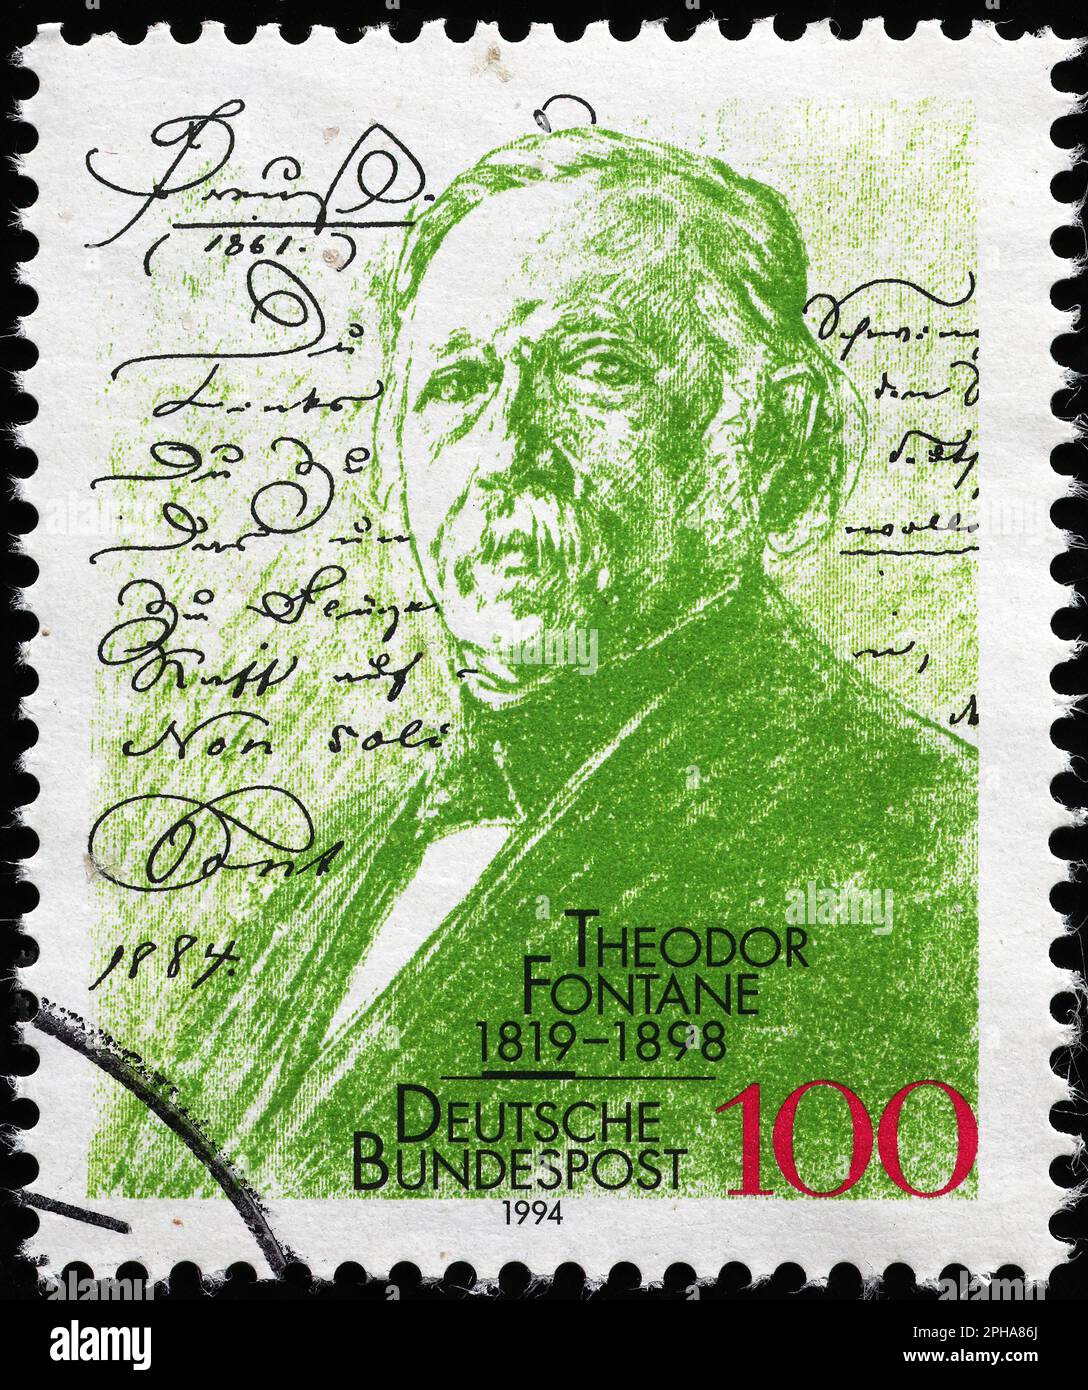 Theodor Fontane on german postage stamp Stock Photo